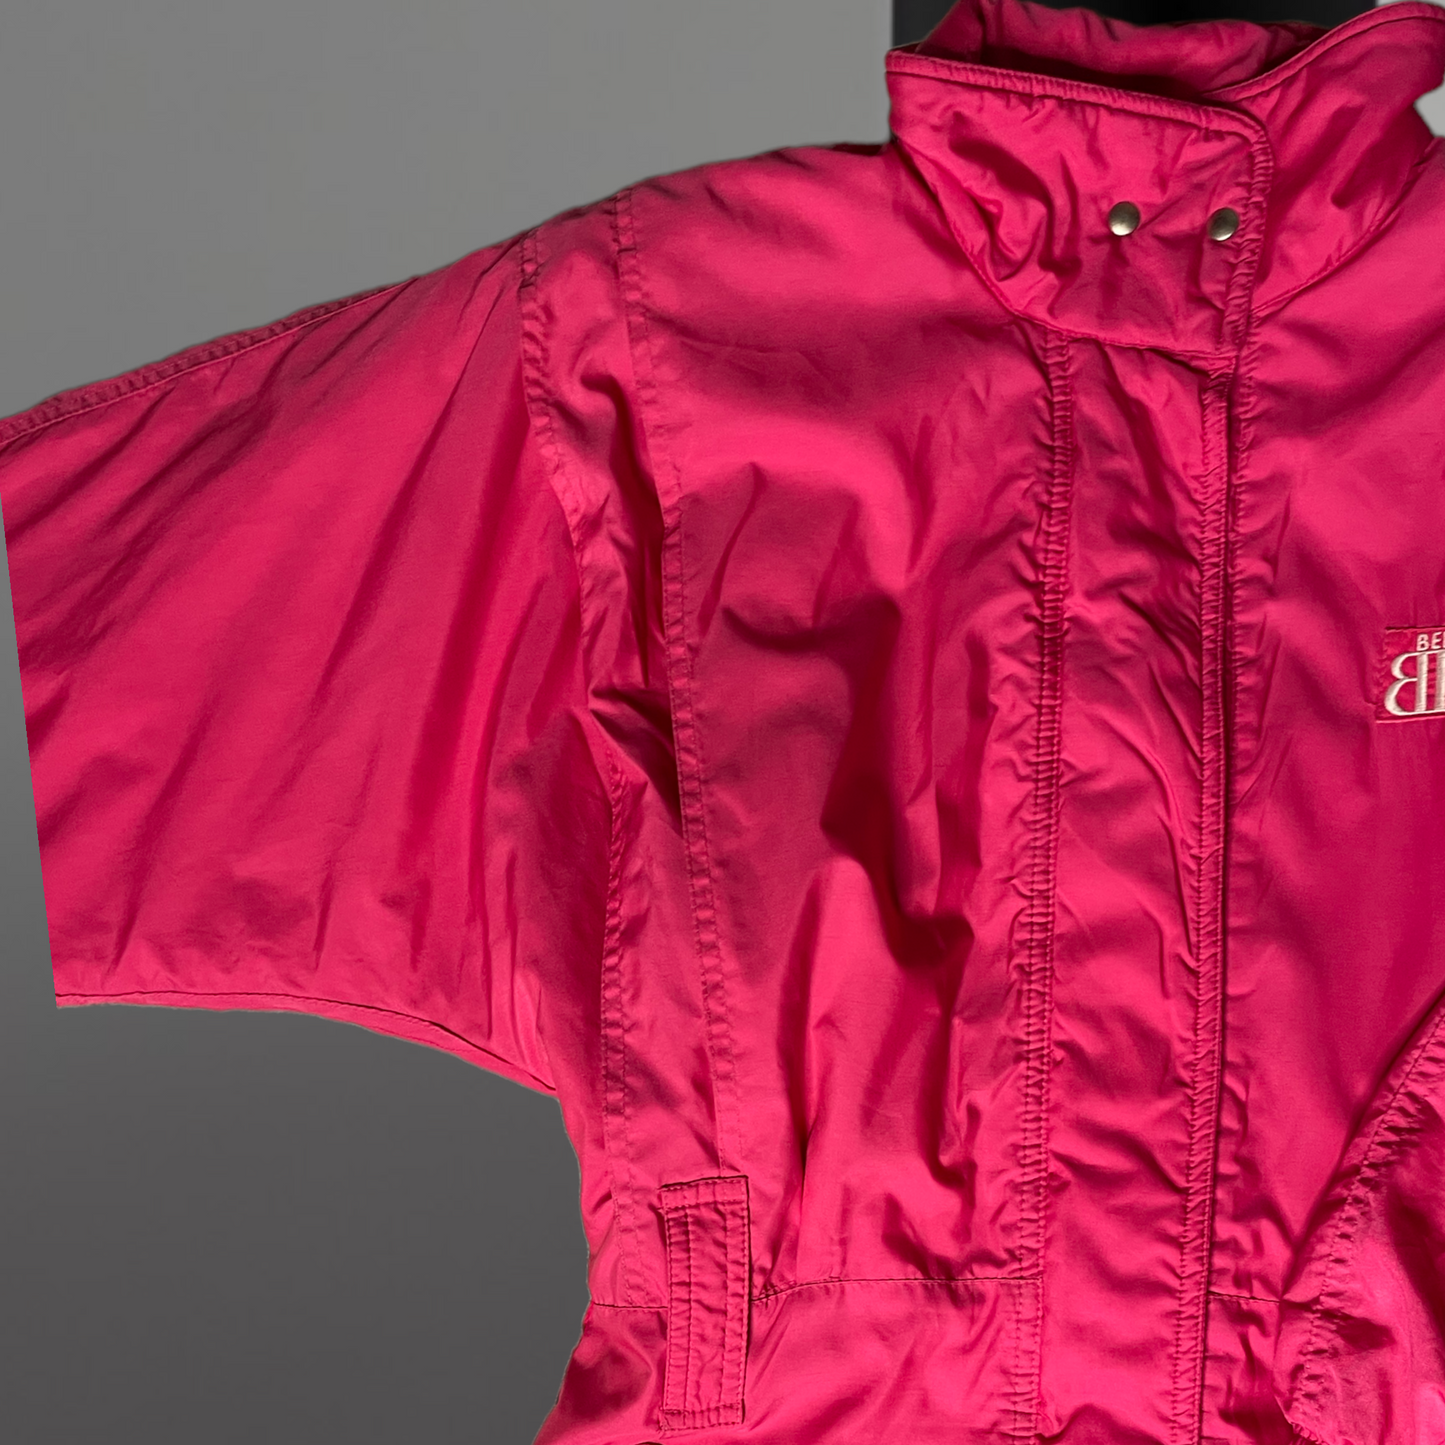 Diana Pink Ski Suit Size S